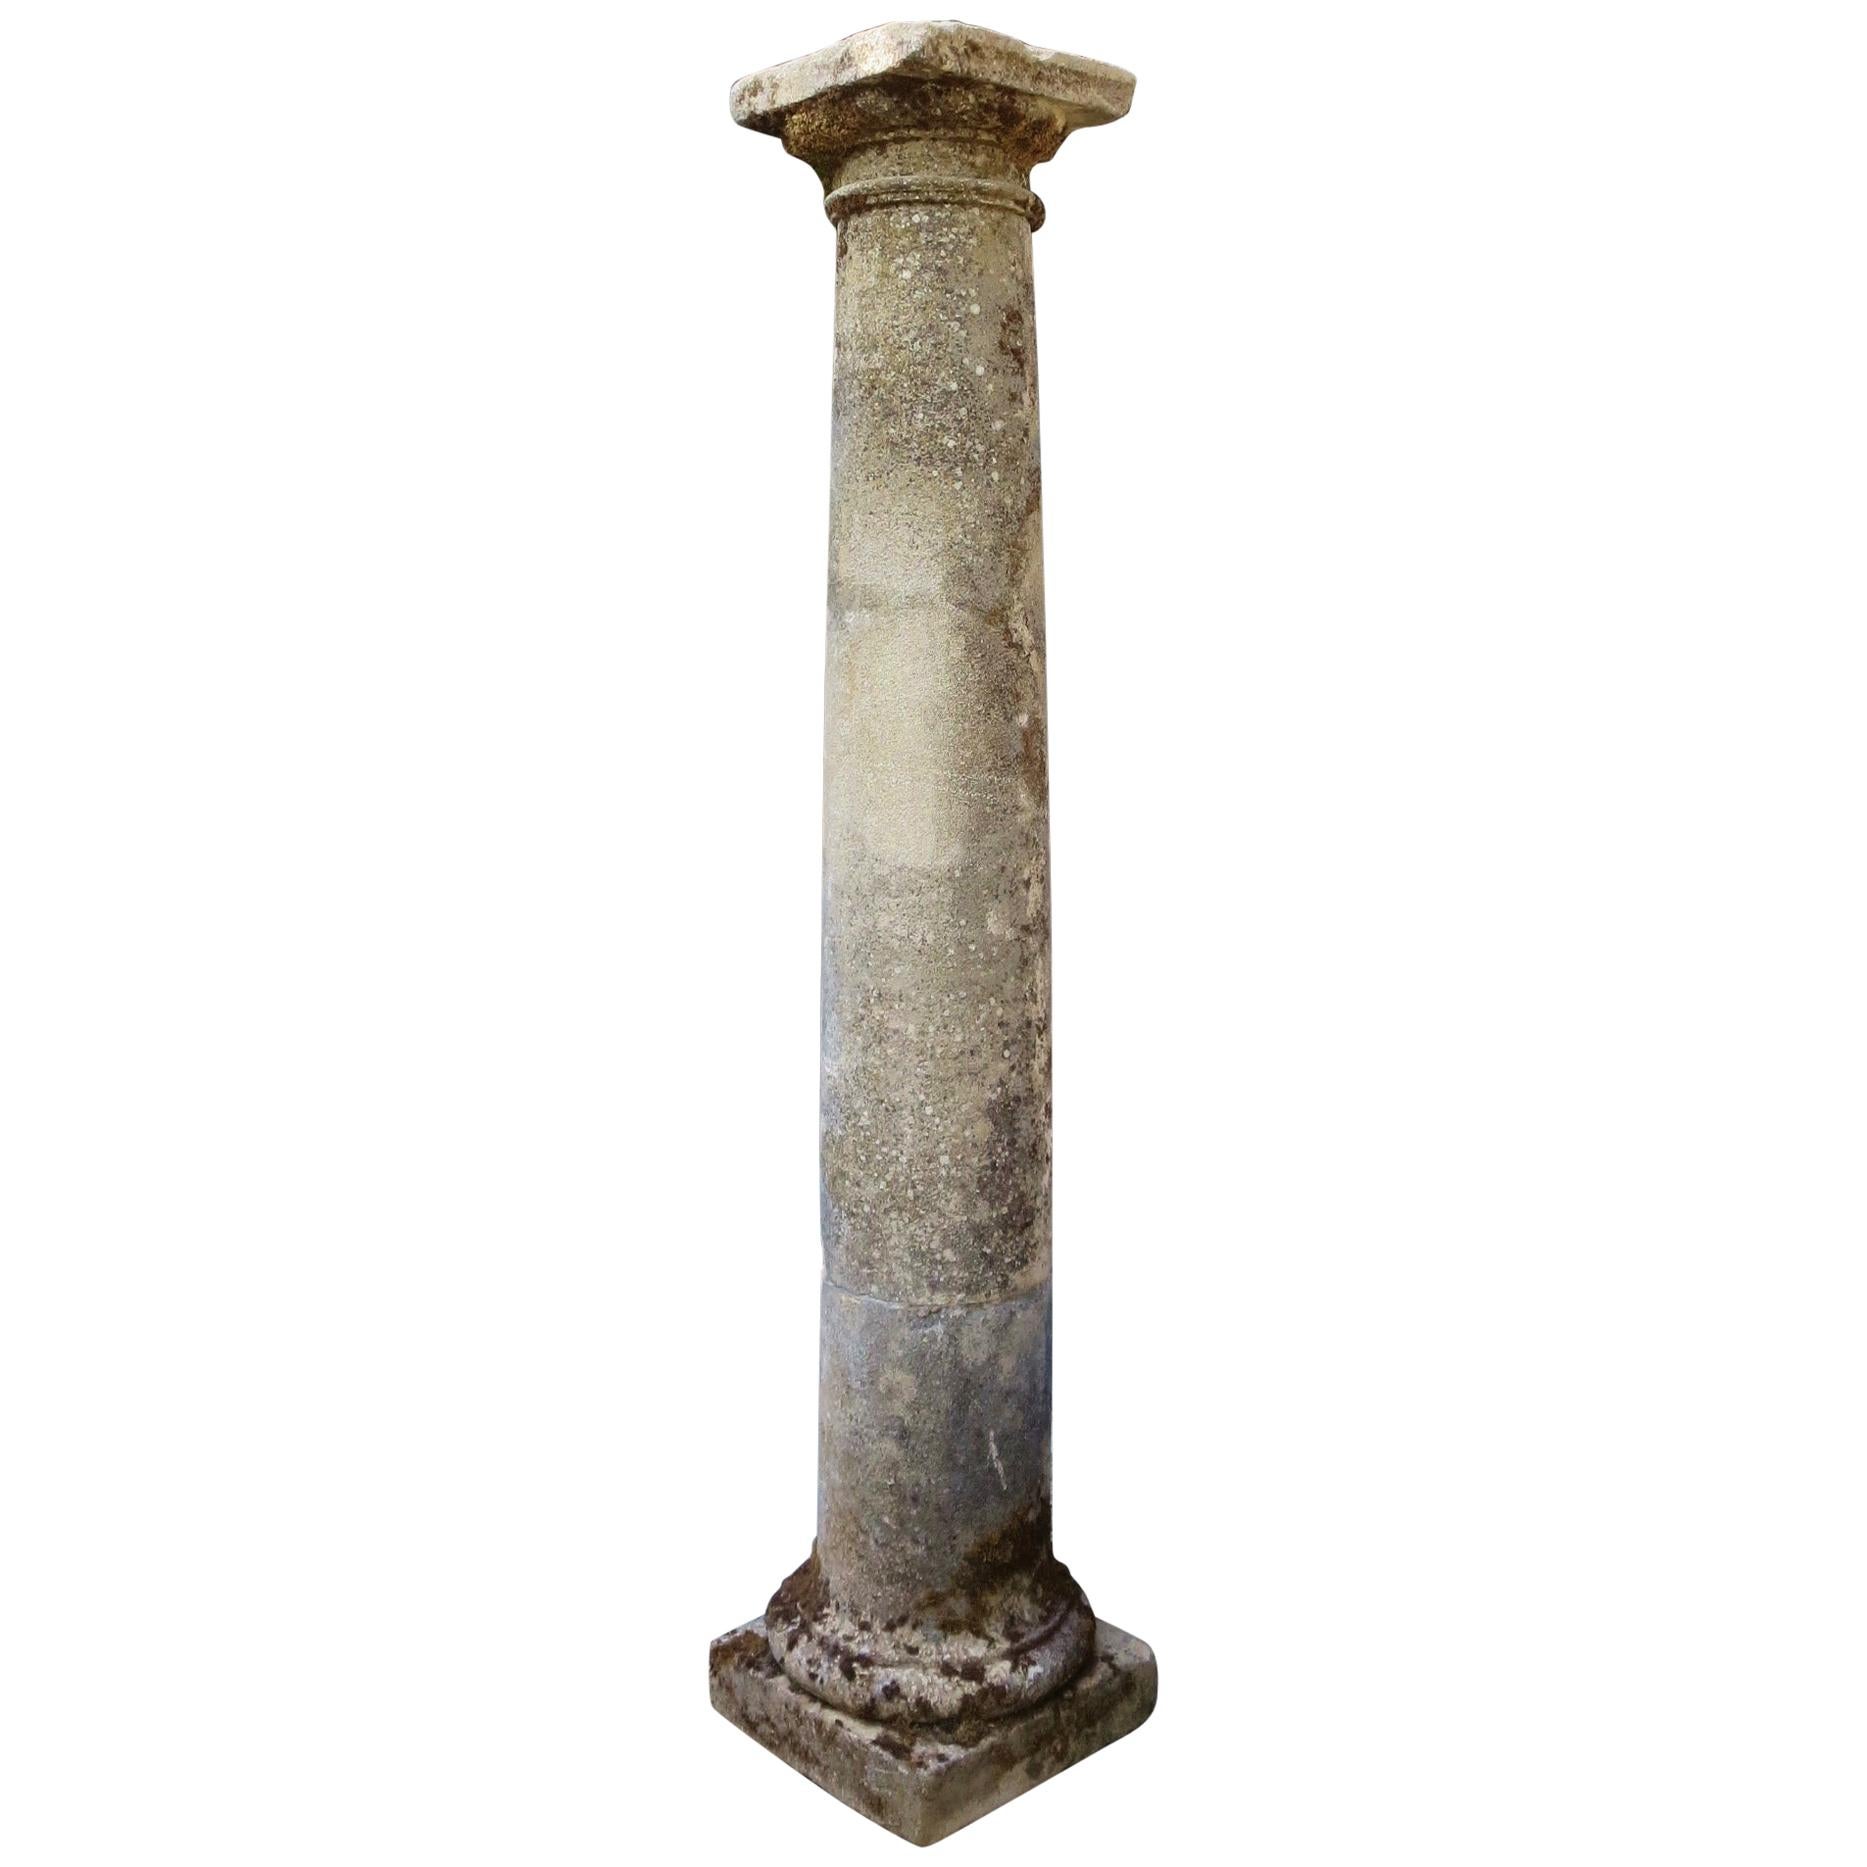 18th Century Hand Carved Stone Garden Columns Architectural Elements Decorative